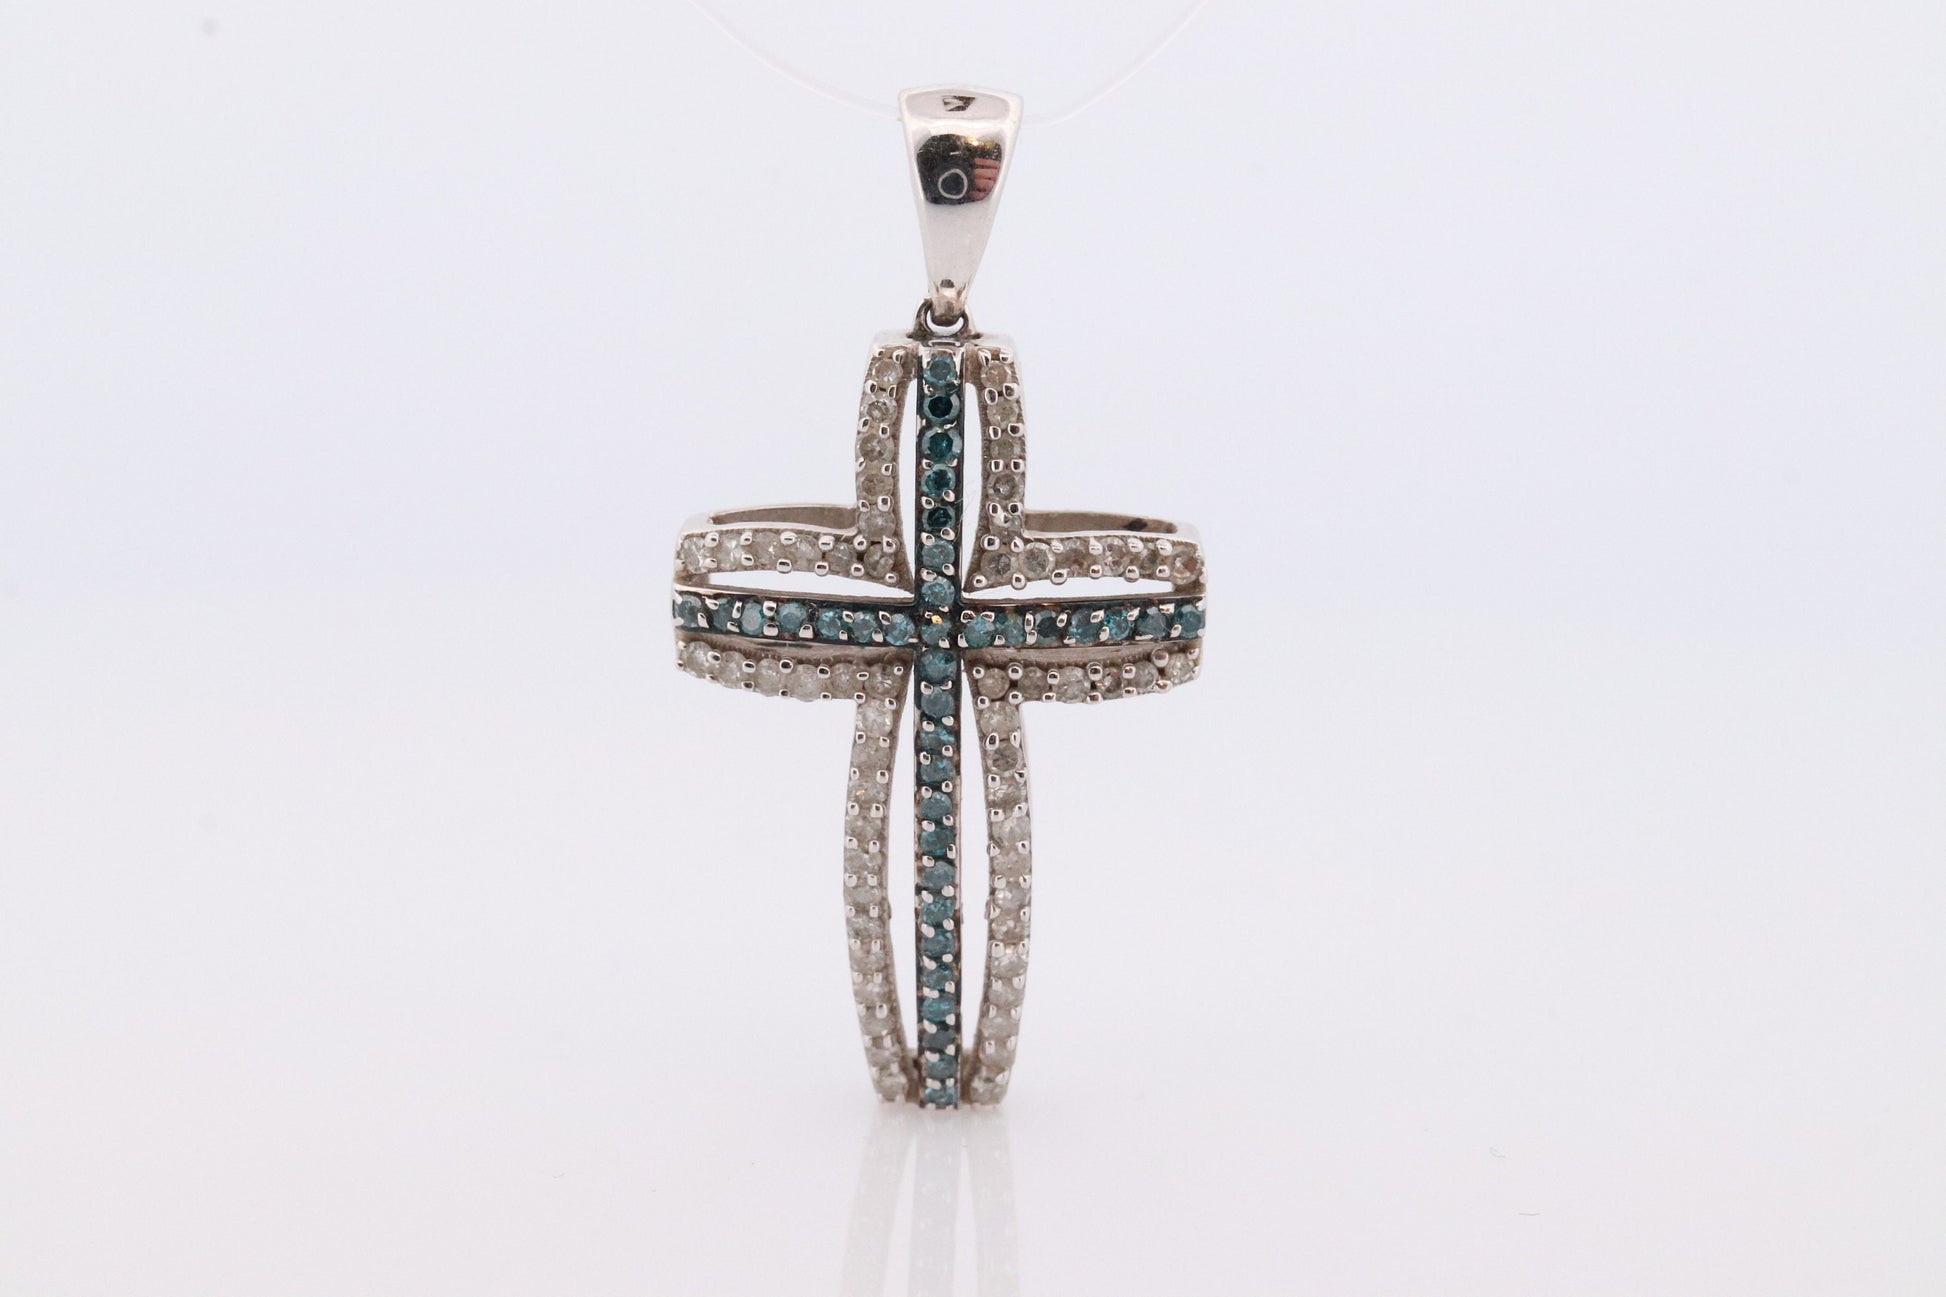 10k Gold Cross Crucifix with Diamonds. 10k Blue Diamond Cluster Pendant. Diamond Encrusted Crucifix.